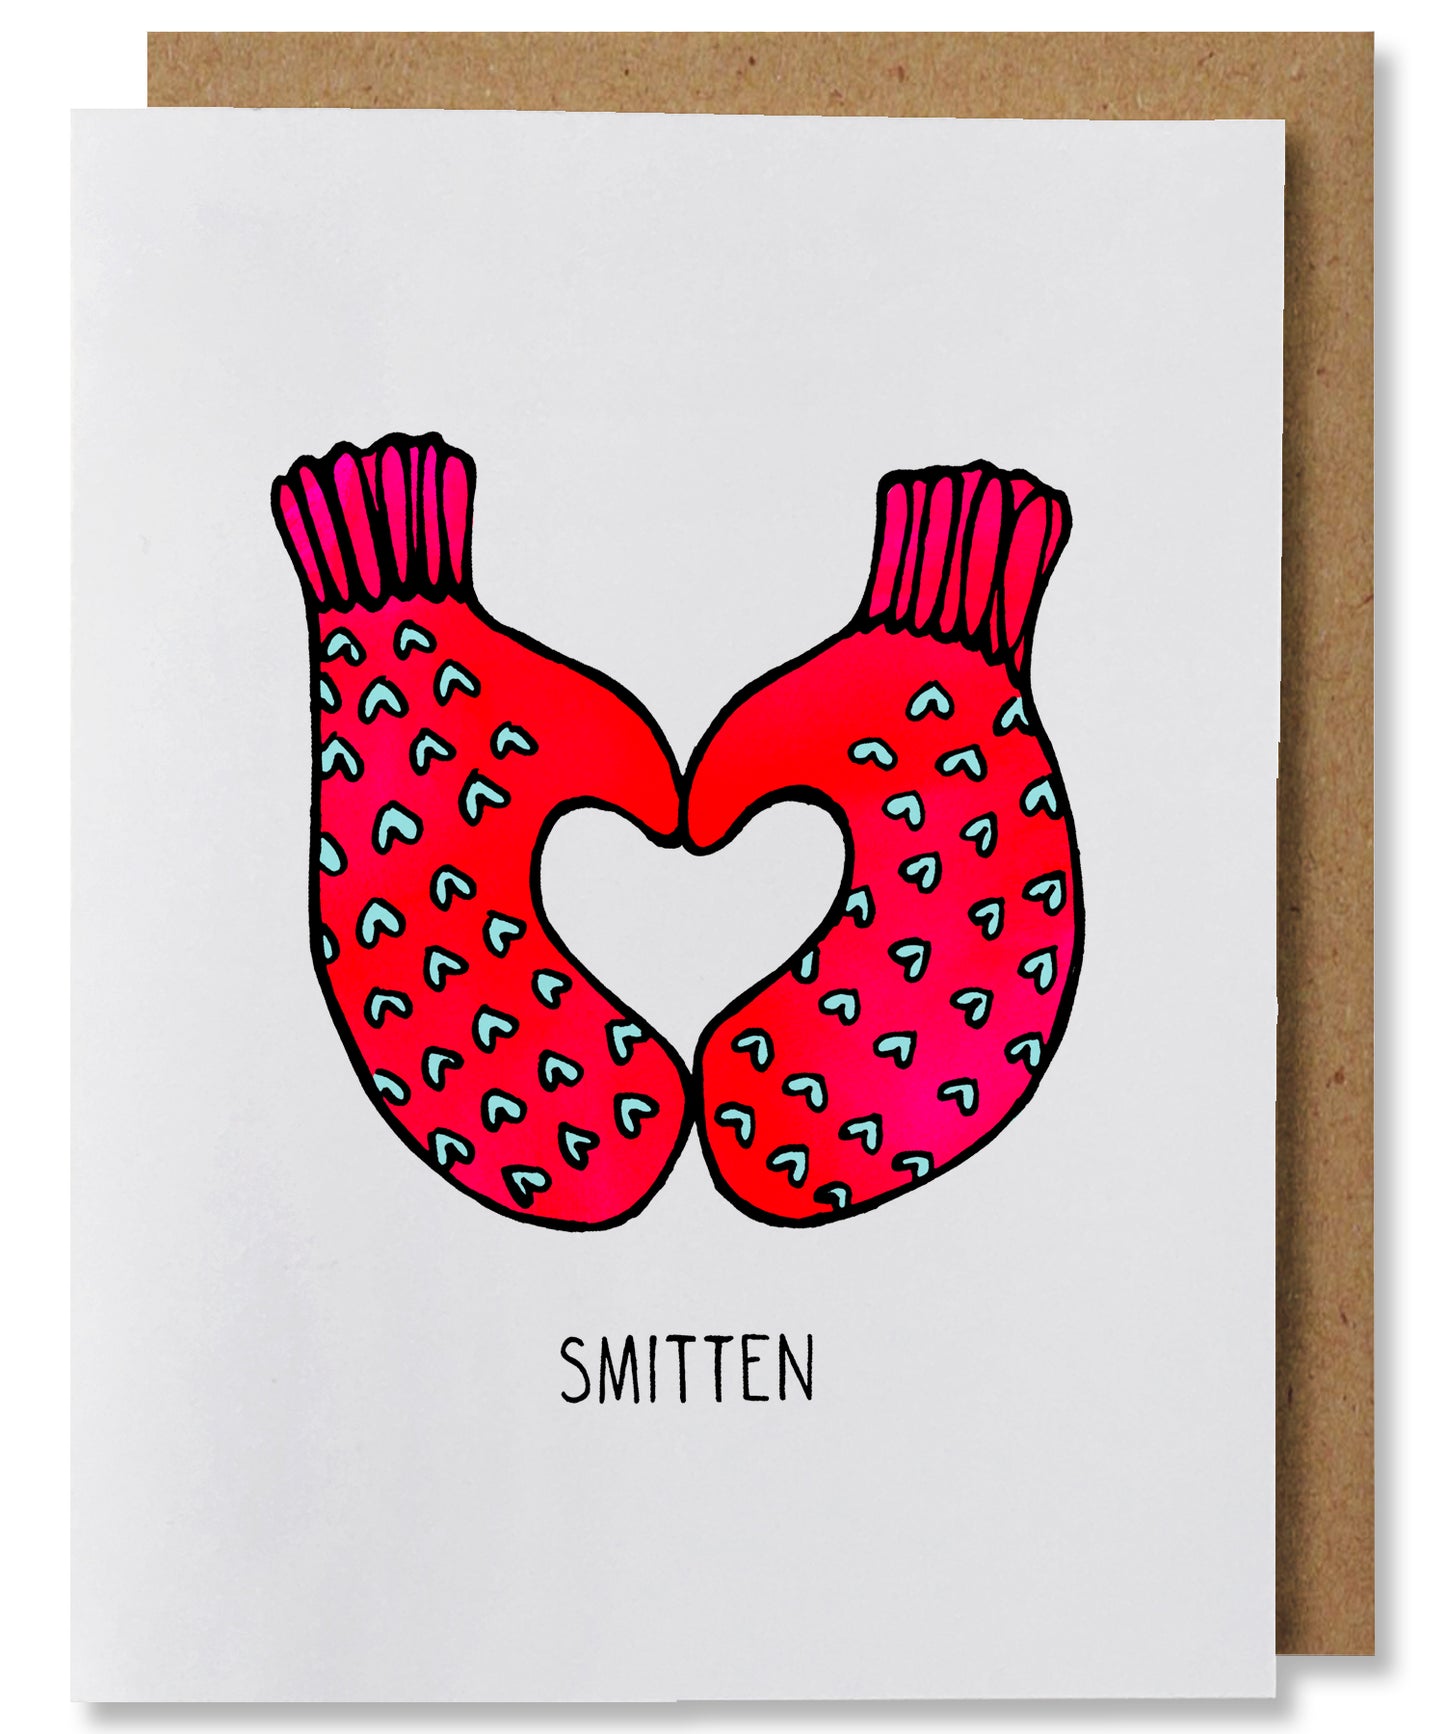 Smitten - Illustrated Funny Mitten Pun Love Valentine's Card